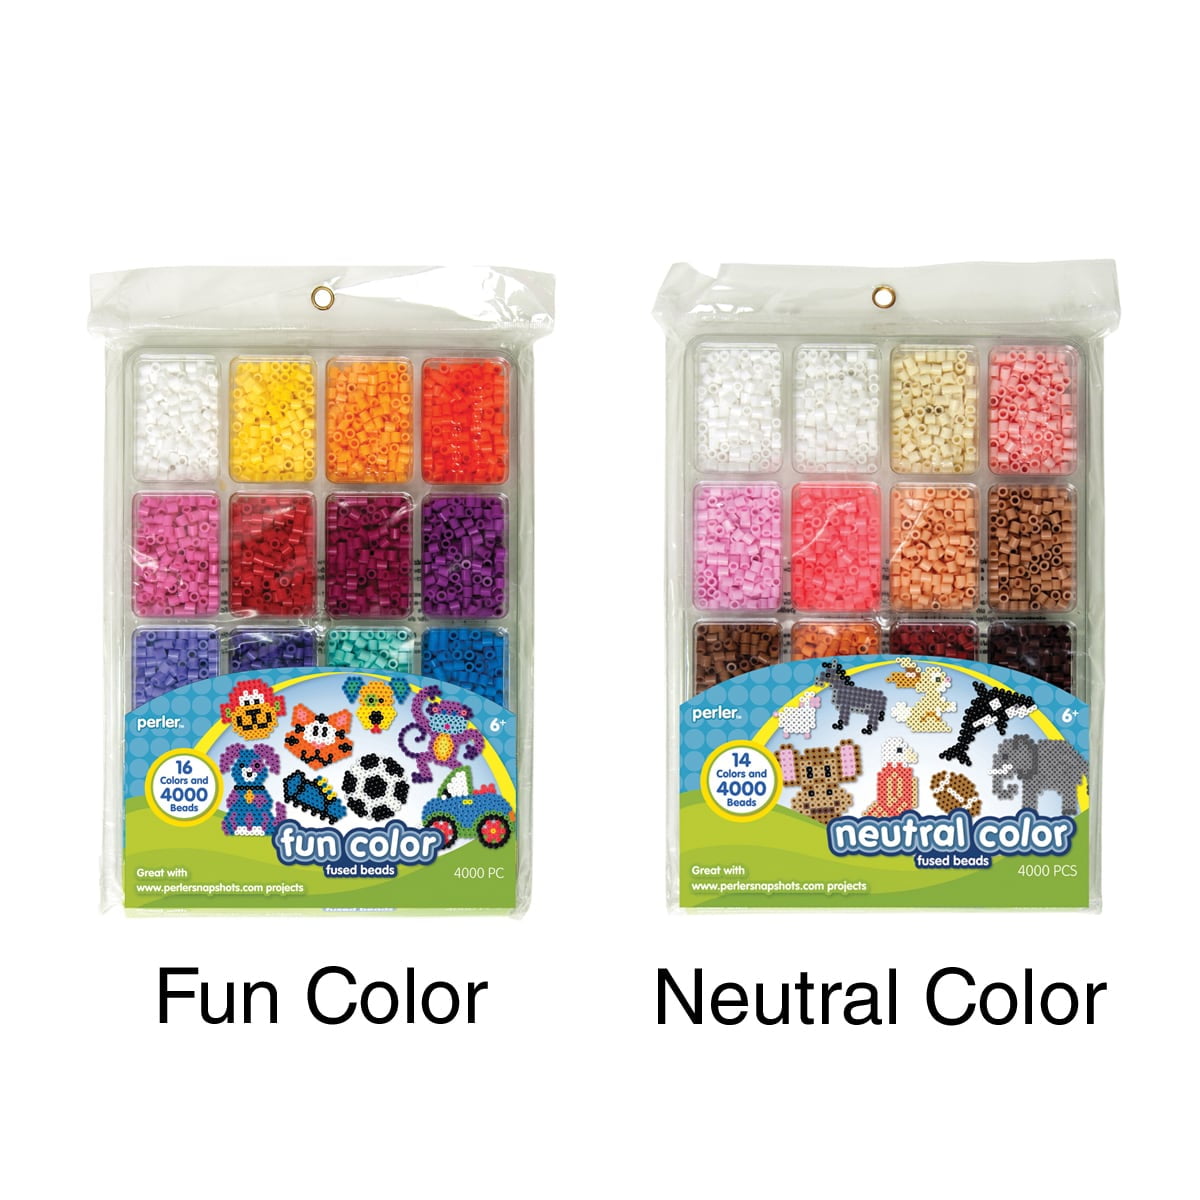 Perler Beads Perler Neutral Colors Bead Tray 80-17514 – Good's Store Online